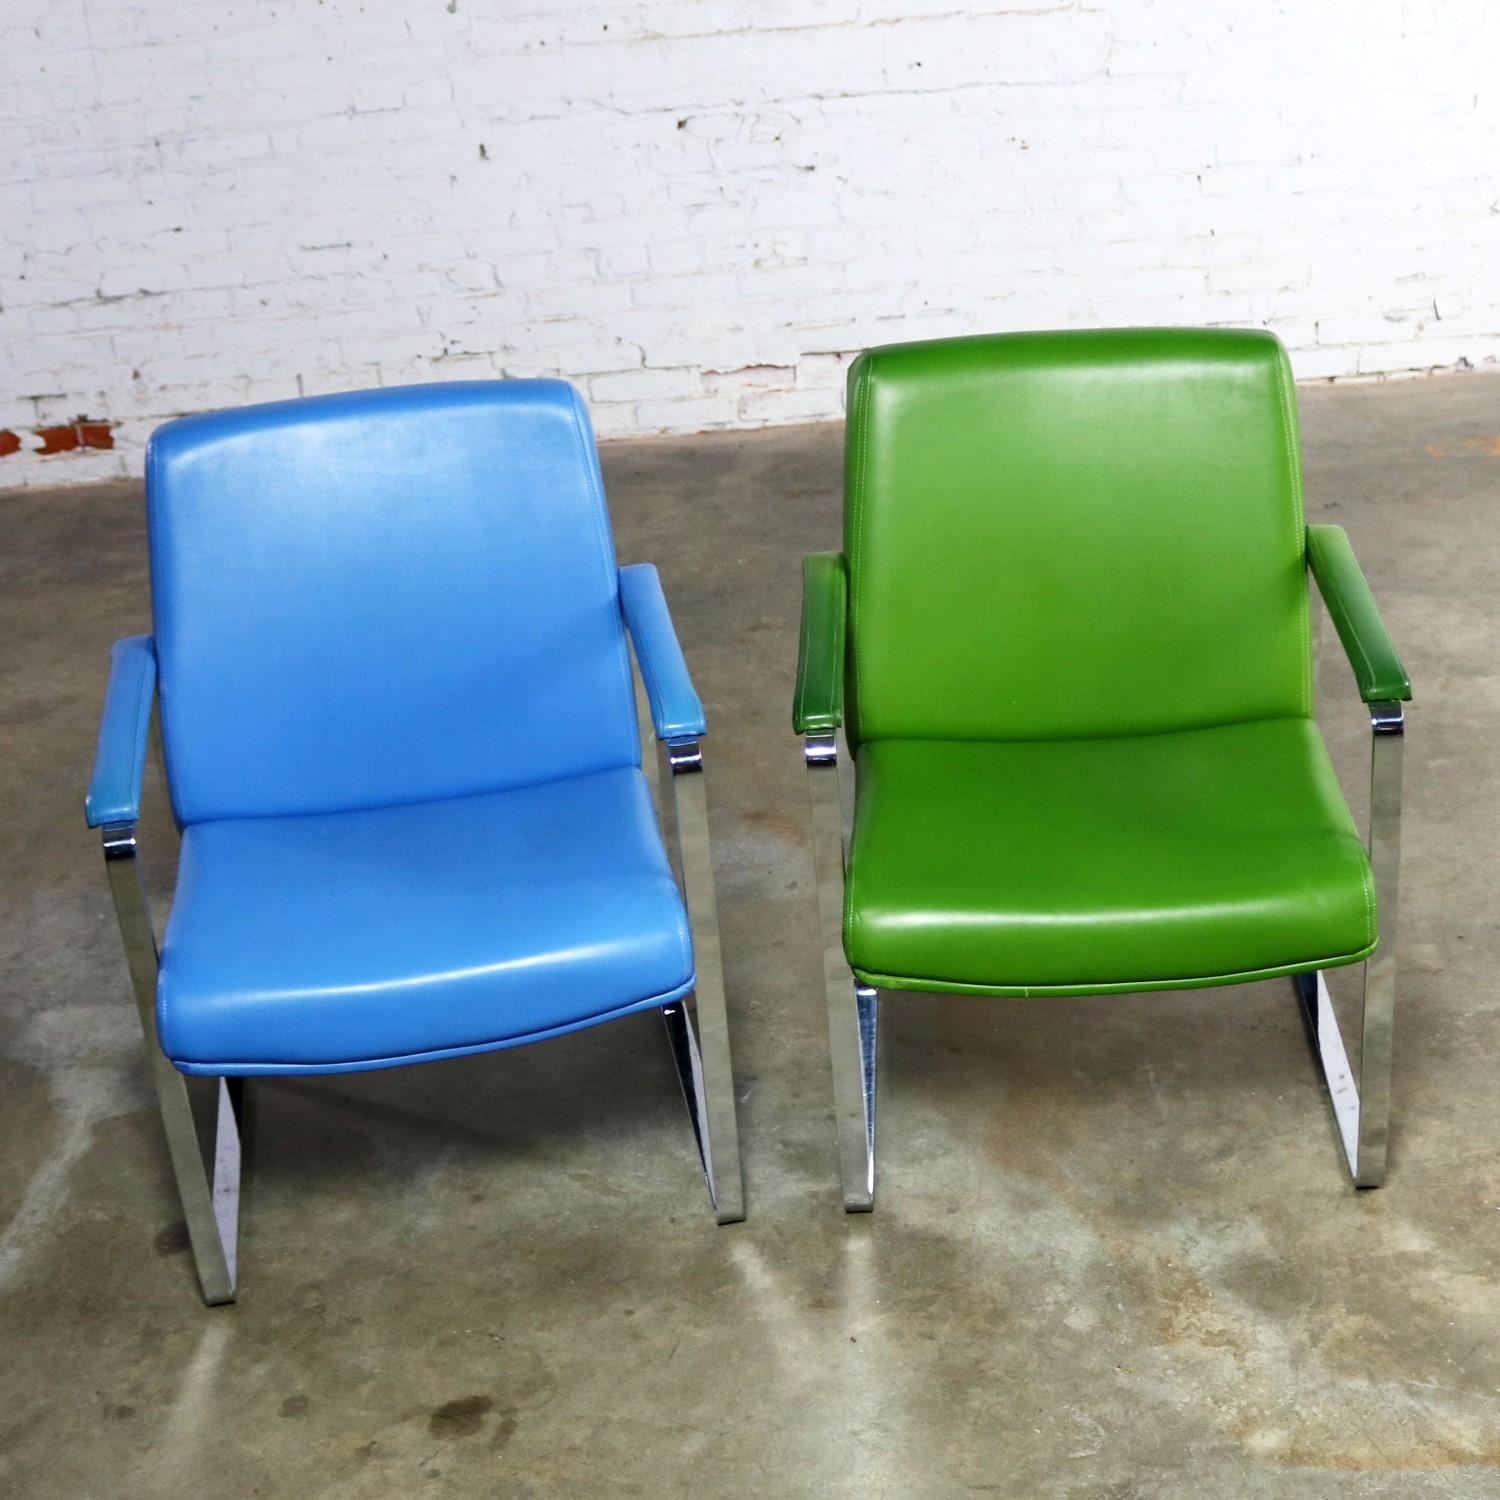 American Mid-Century Modern Chromcraft Flat Bar Chrome Chairs One Blue One Green Vinyl